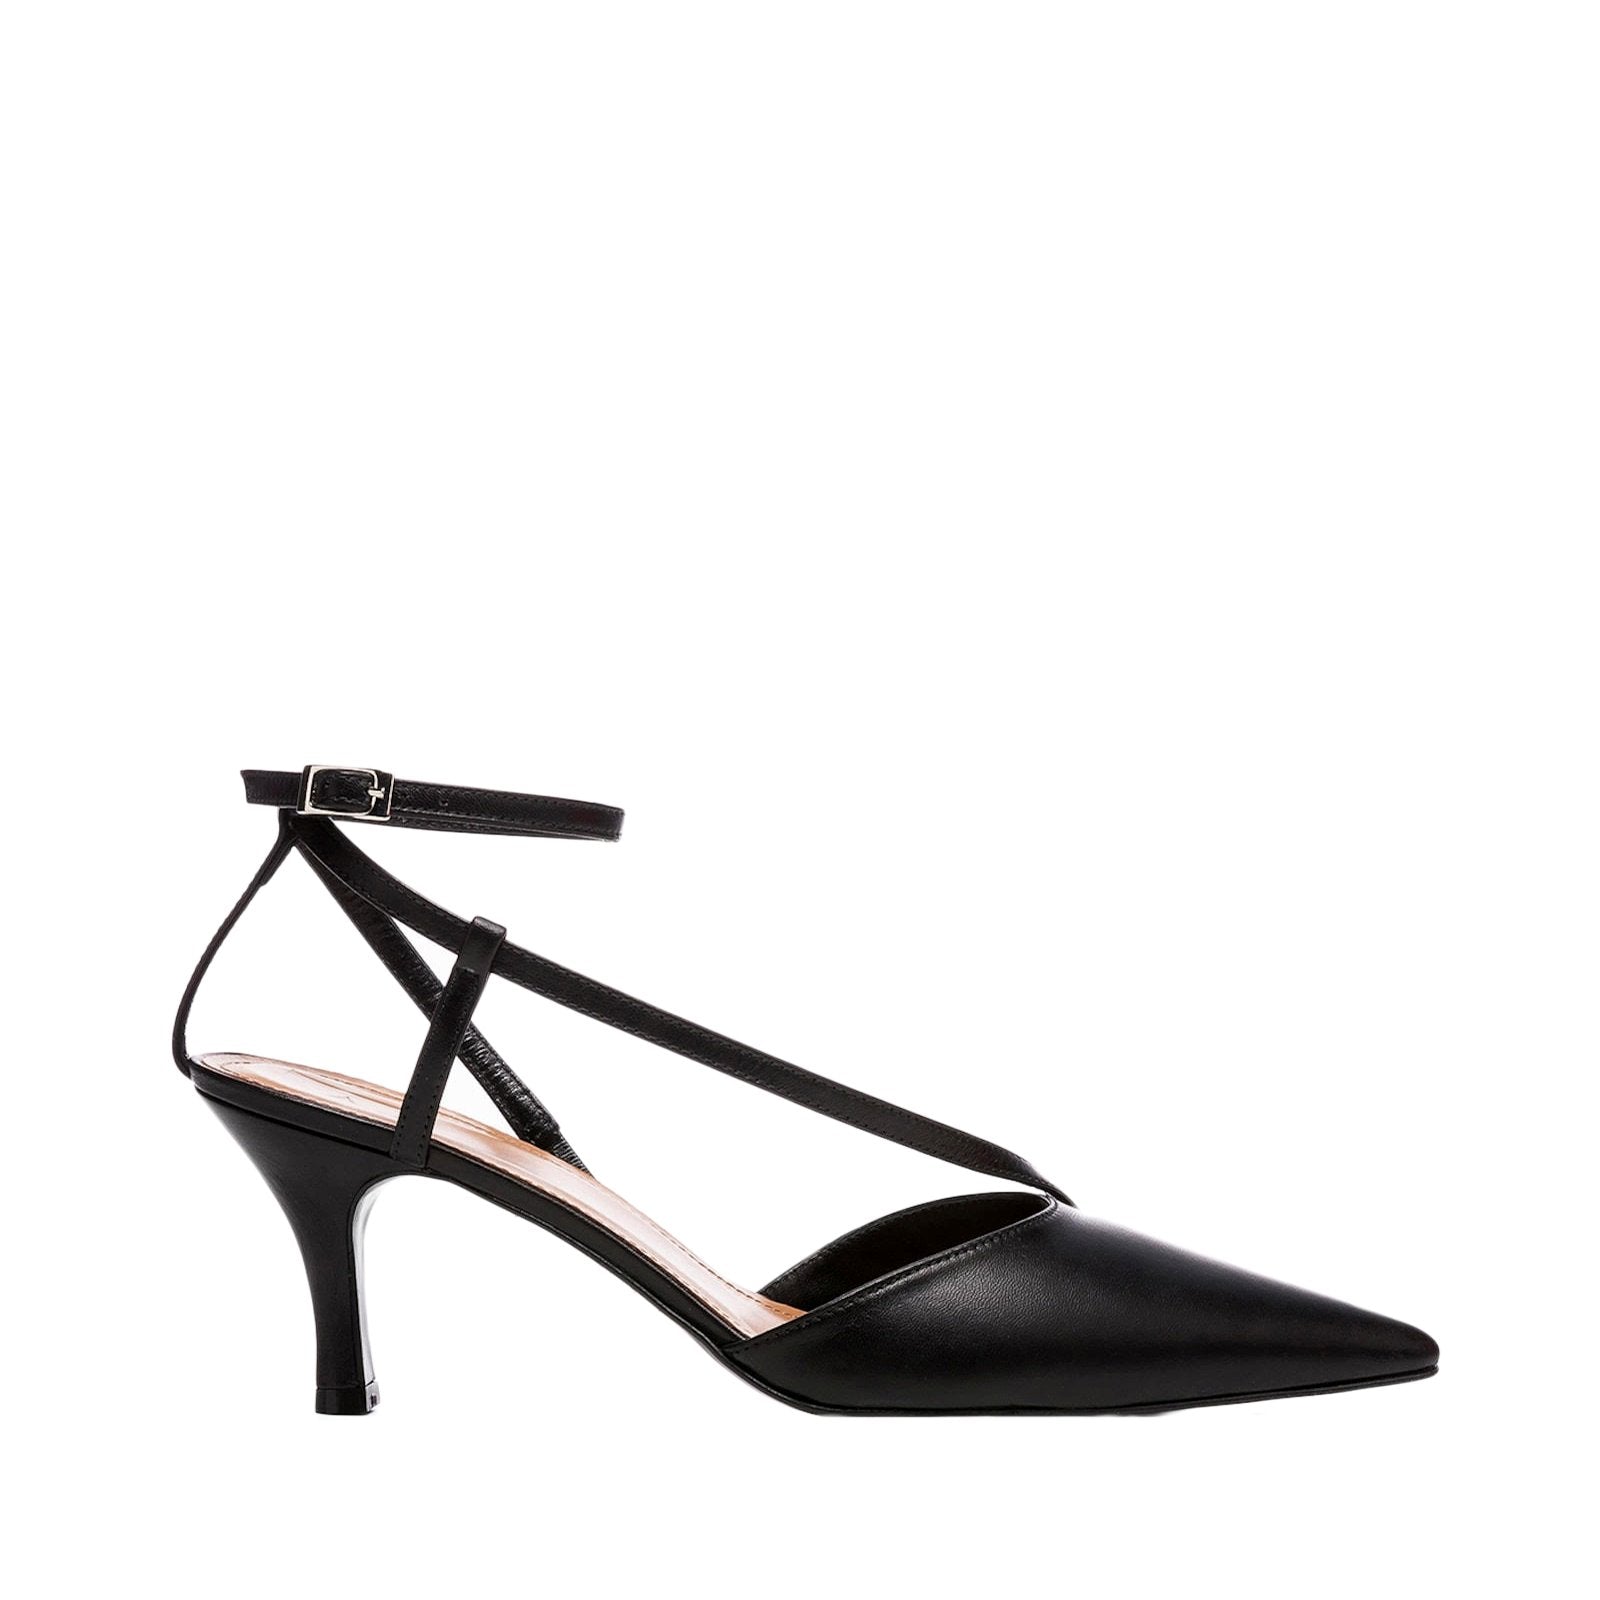 Fay Leather Black Heeled Shoes Heels 20010411601-001 - 1